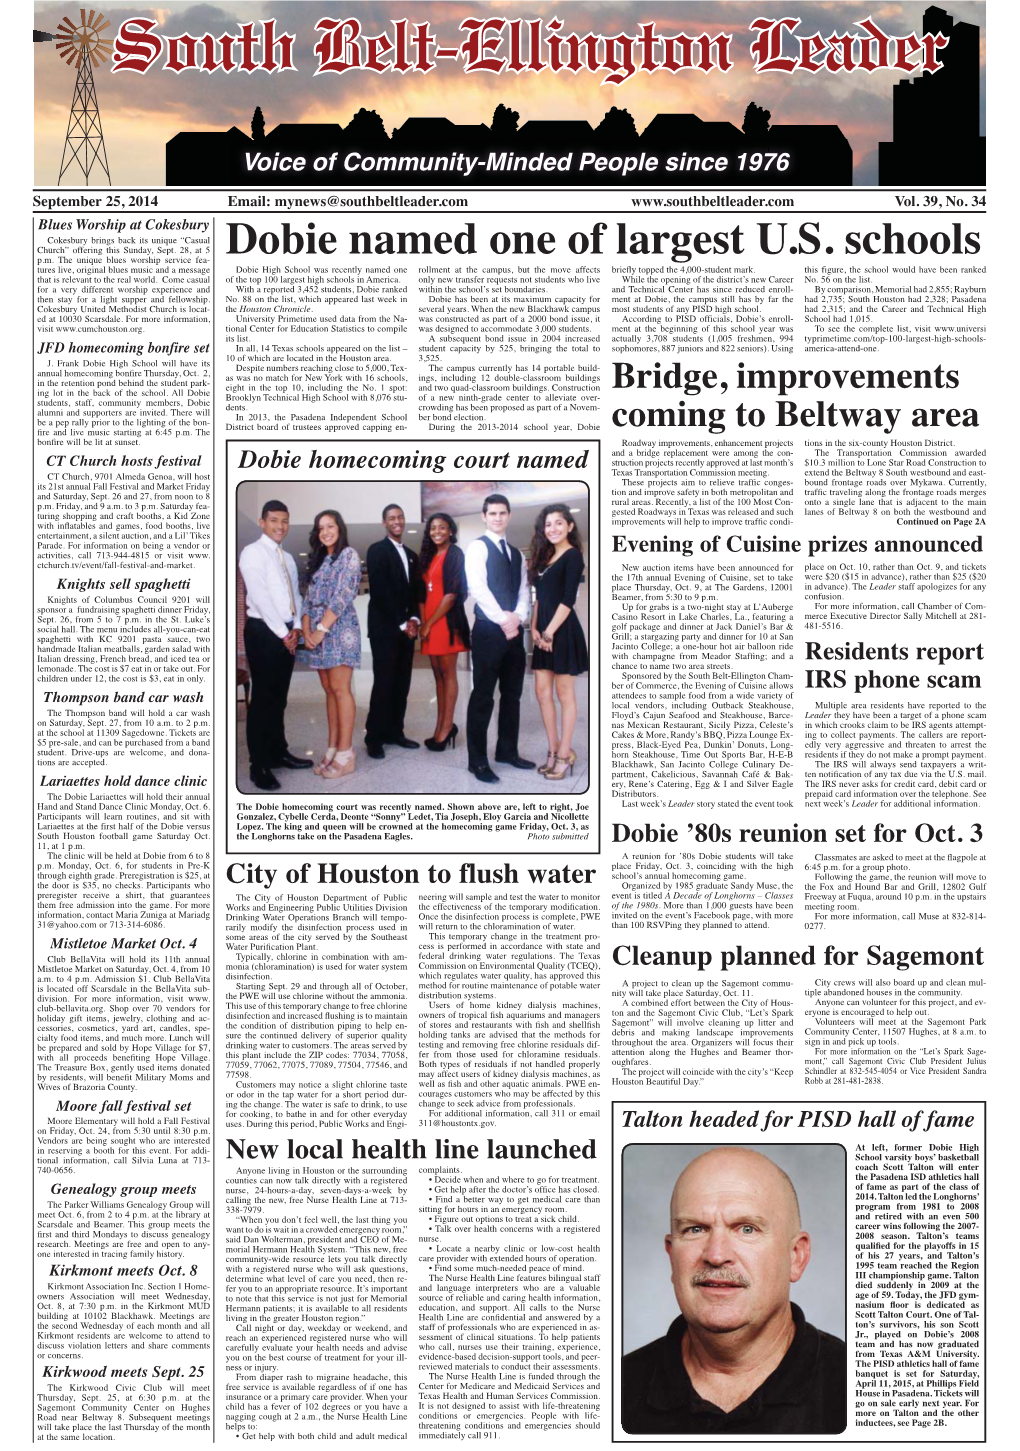 Dobie Named One of Largest U.S. Schools P.M